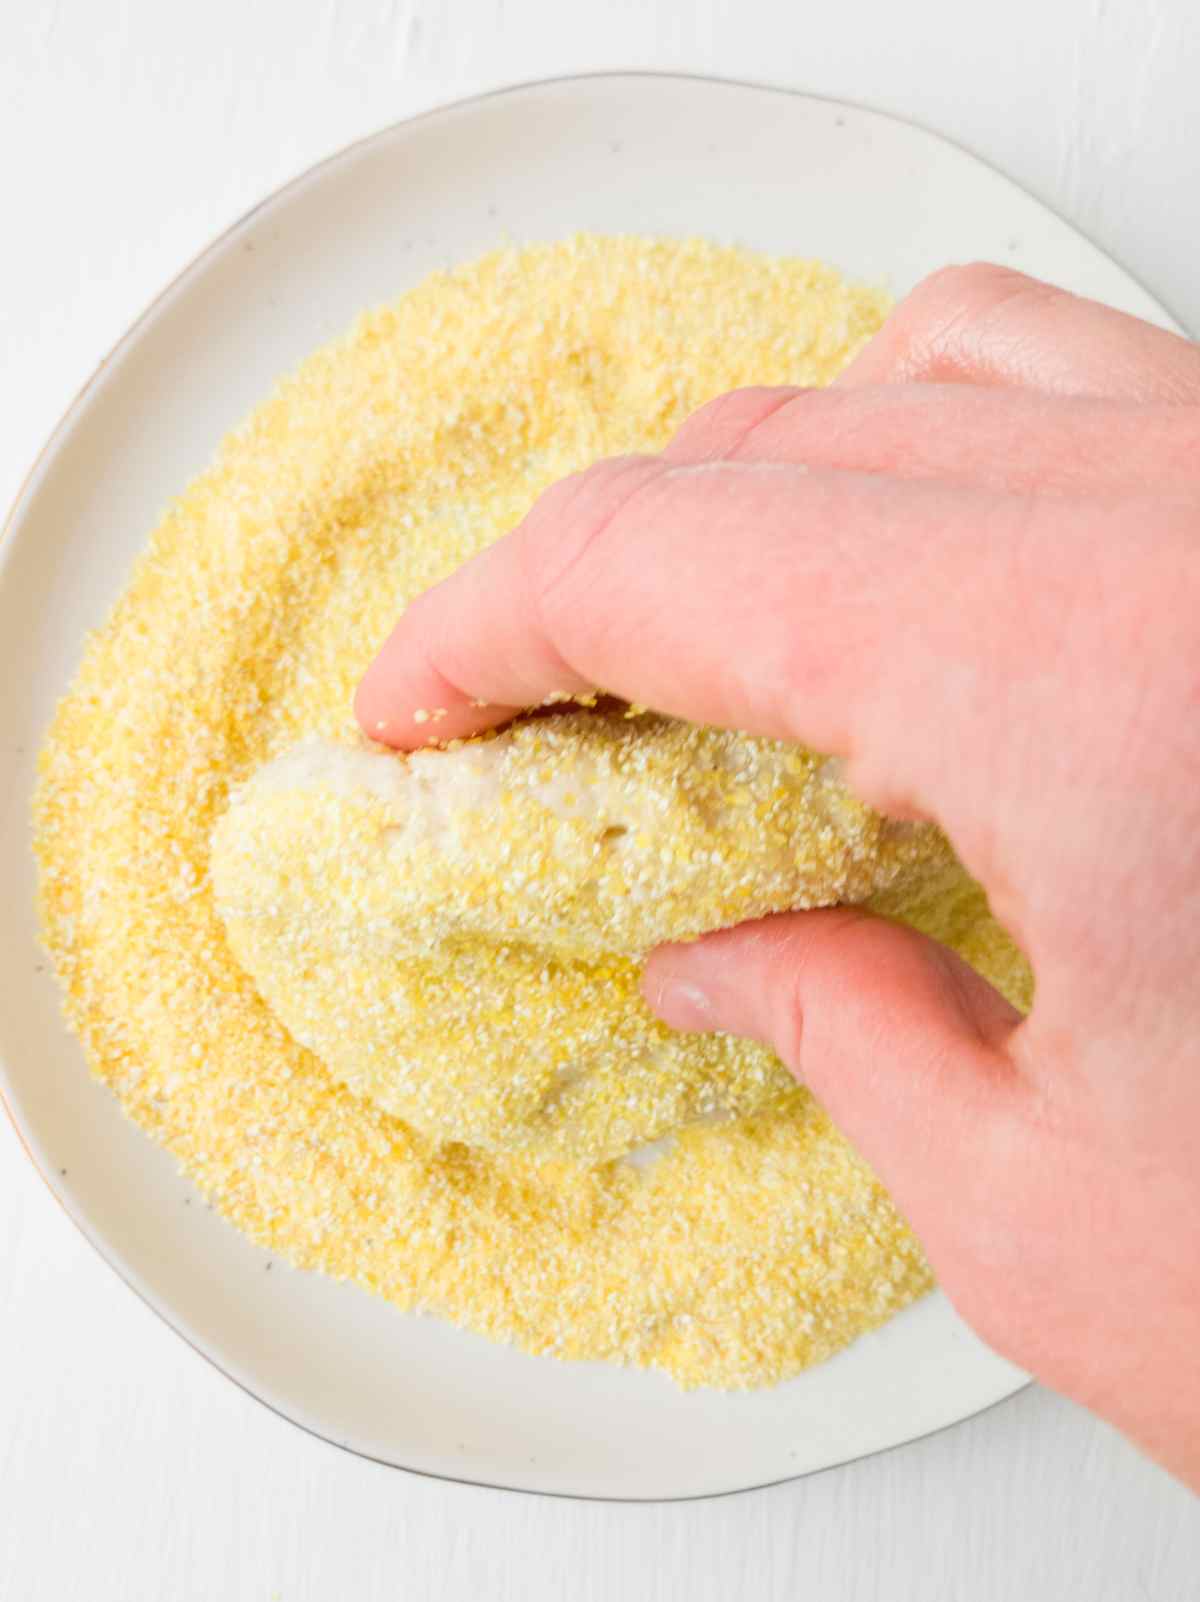 Dipping a muffin disc in cornmeal.